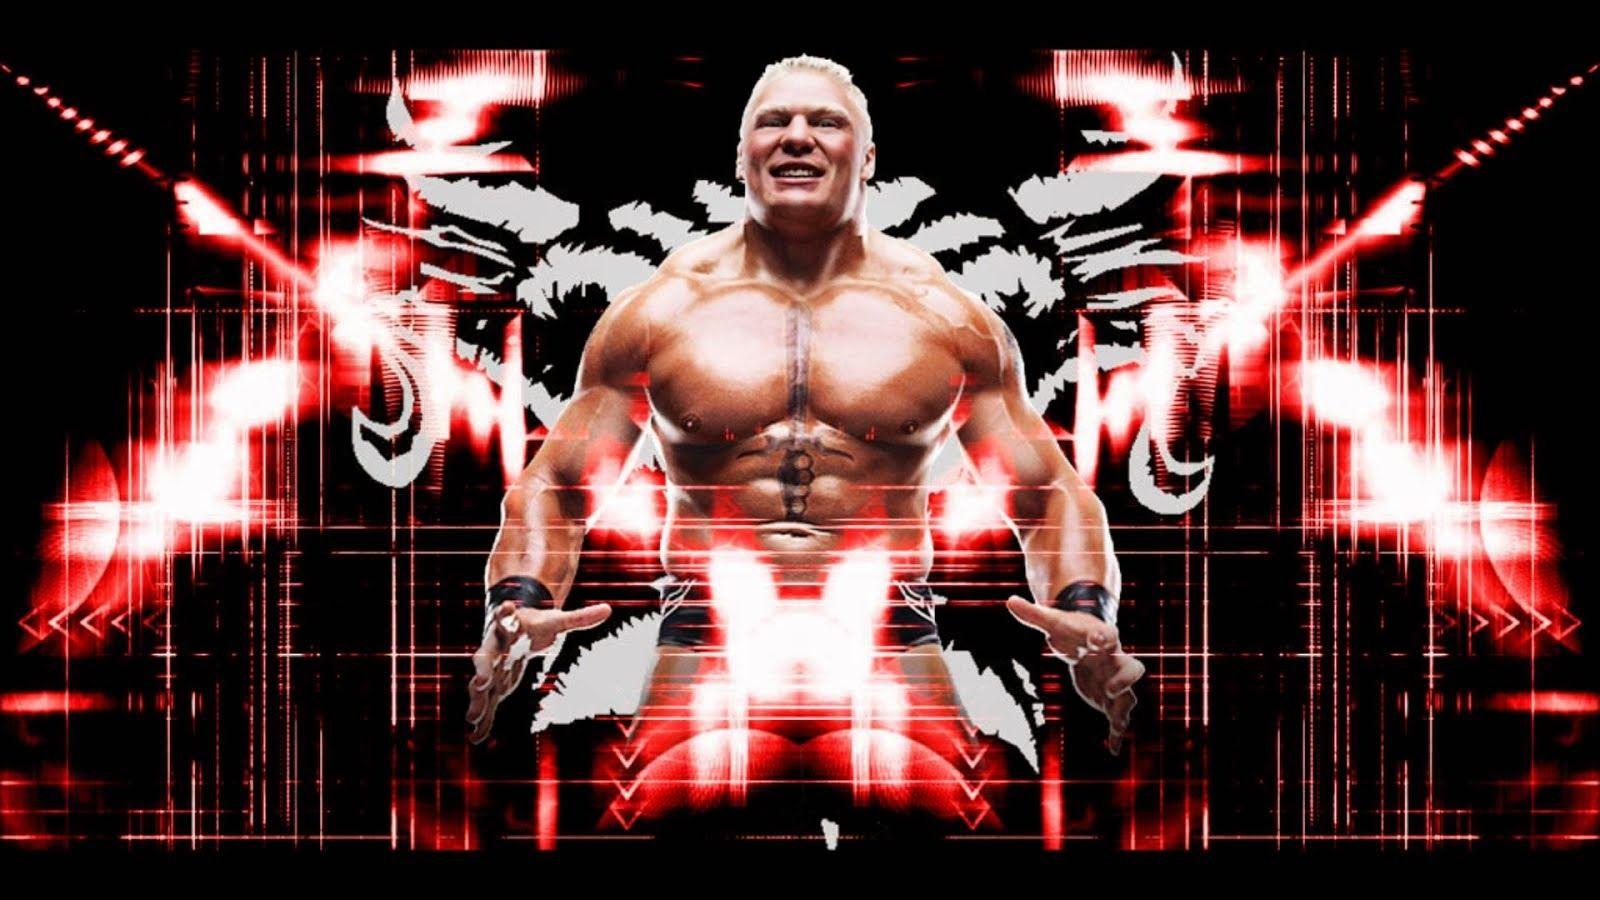 Brock Lesnar WWE Wrestler HD Wallpaper And Image Download Free